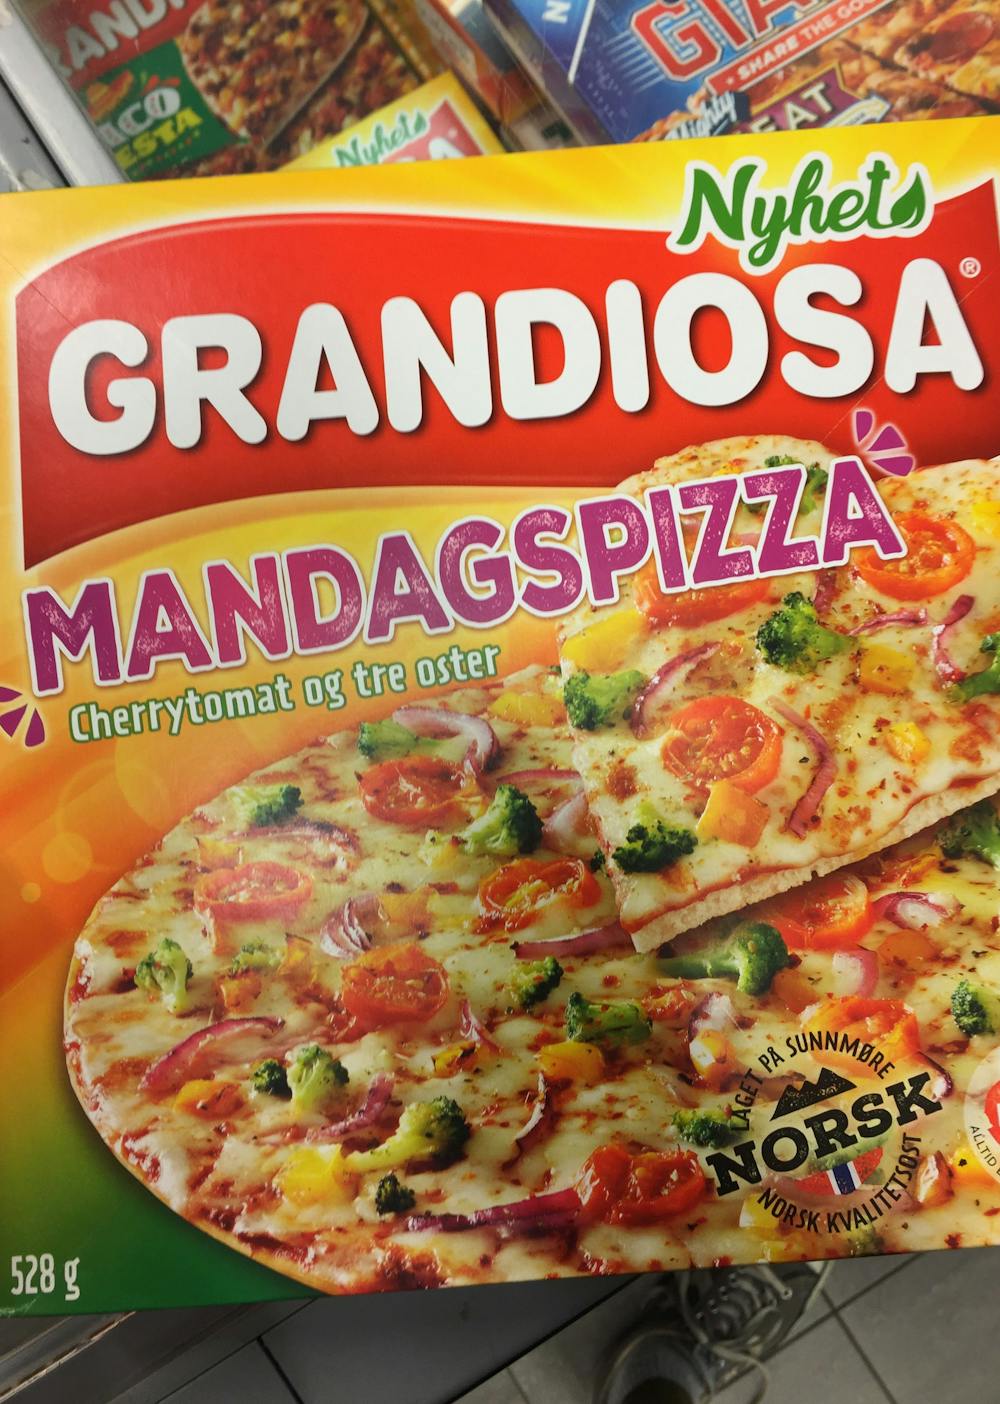 Mandagspizza, Grandiosa